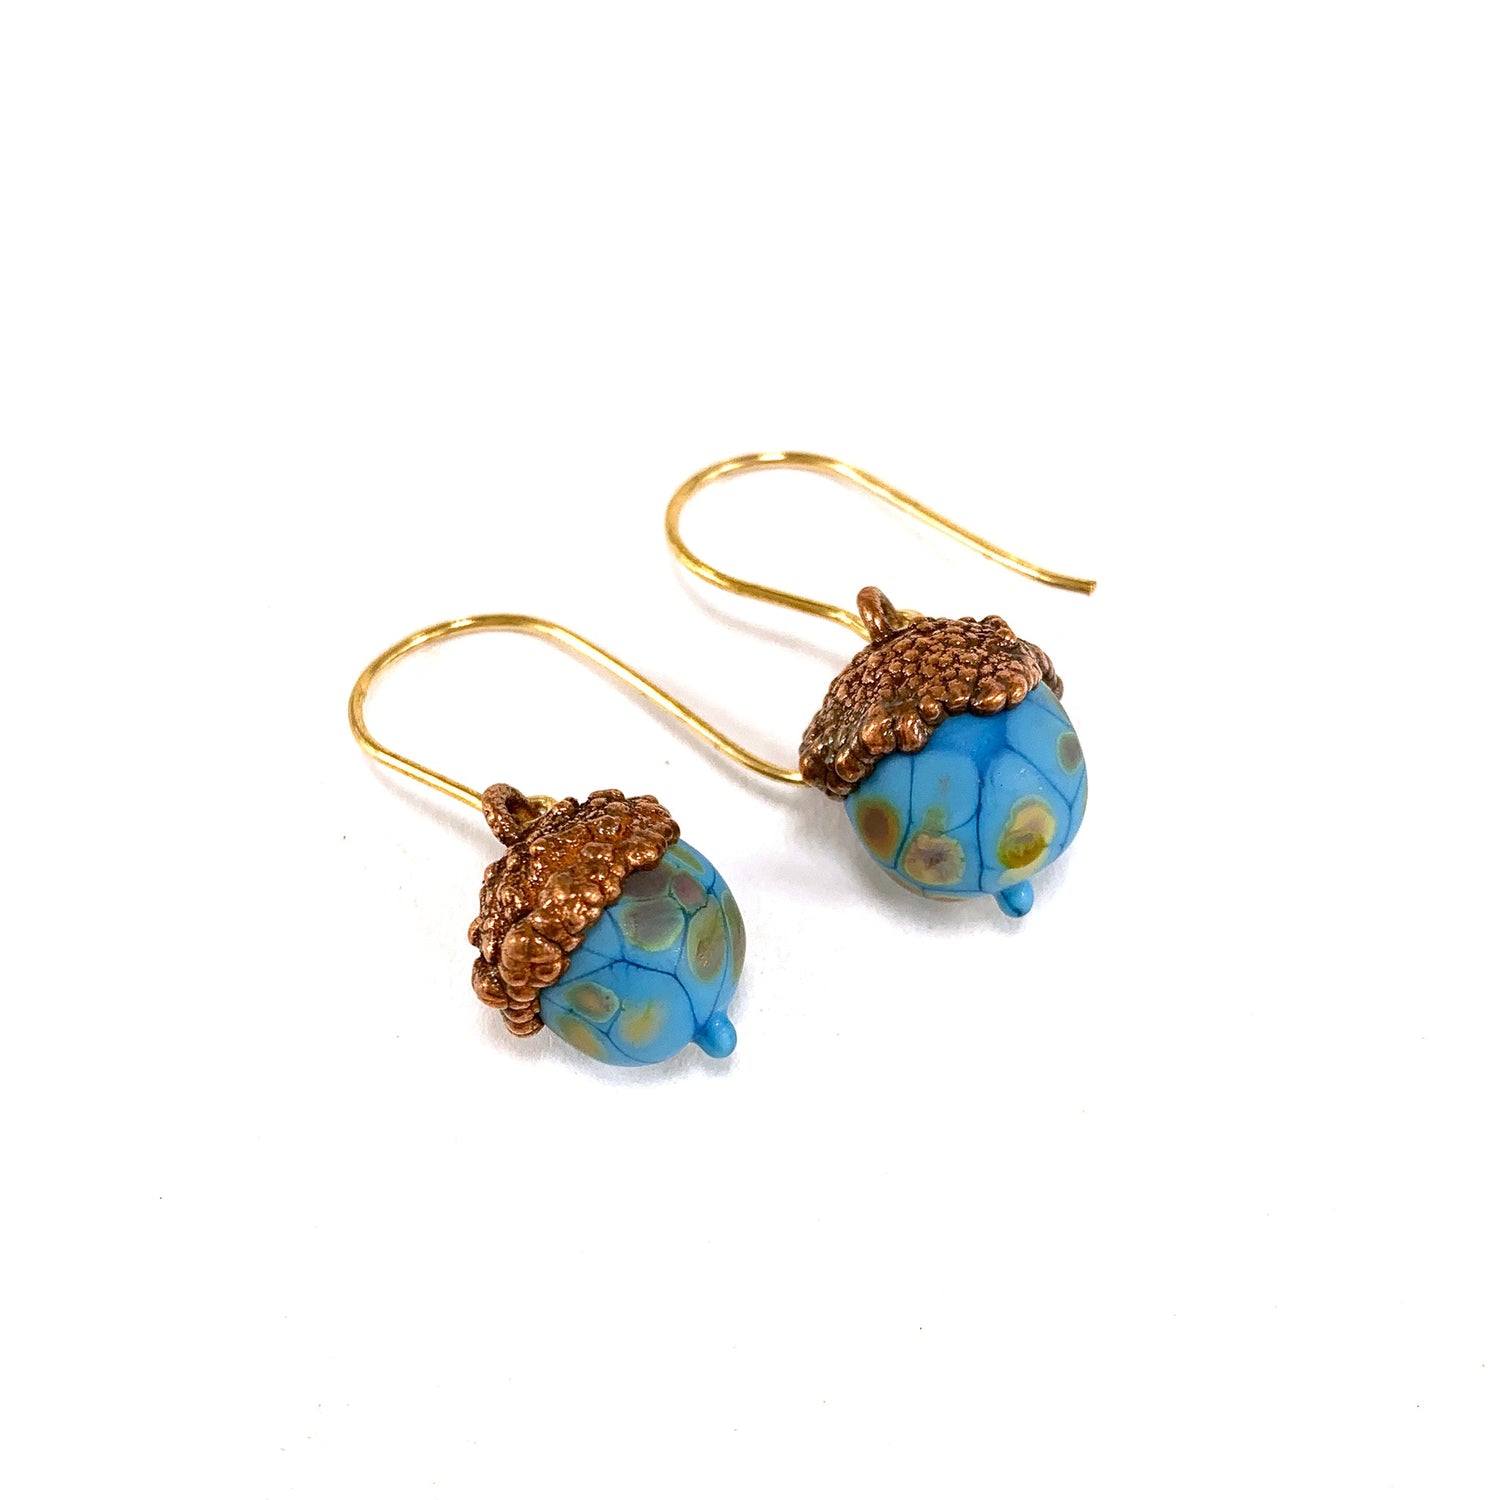 Tiny Acorn Earrings - The Glass Acorn